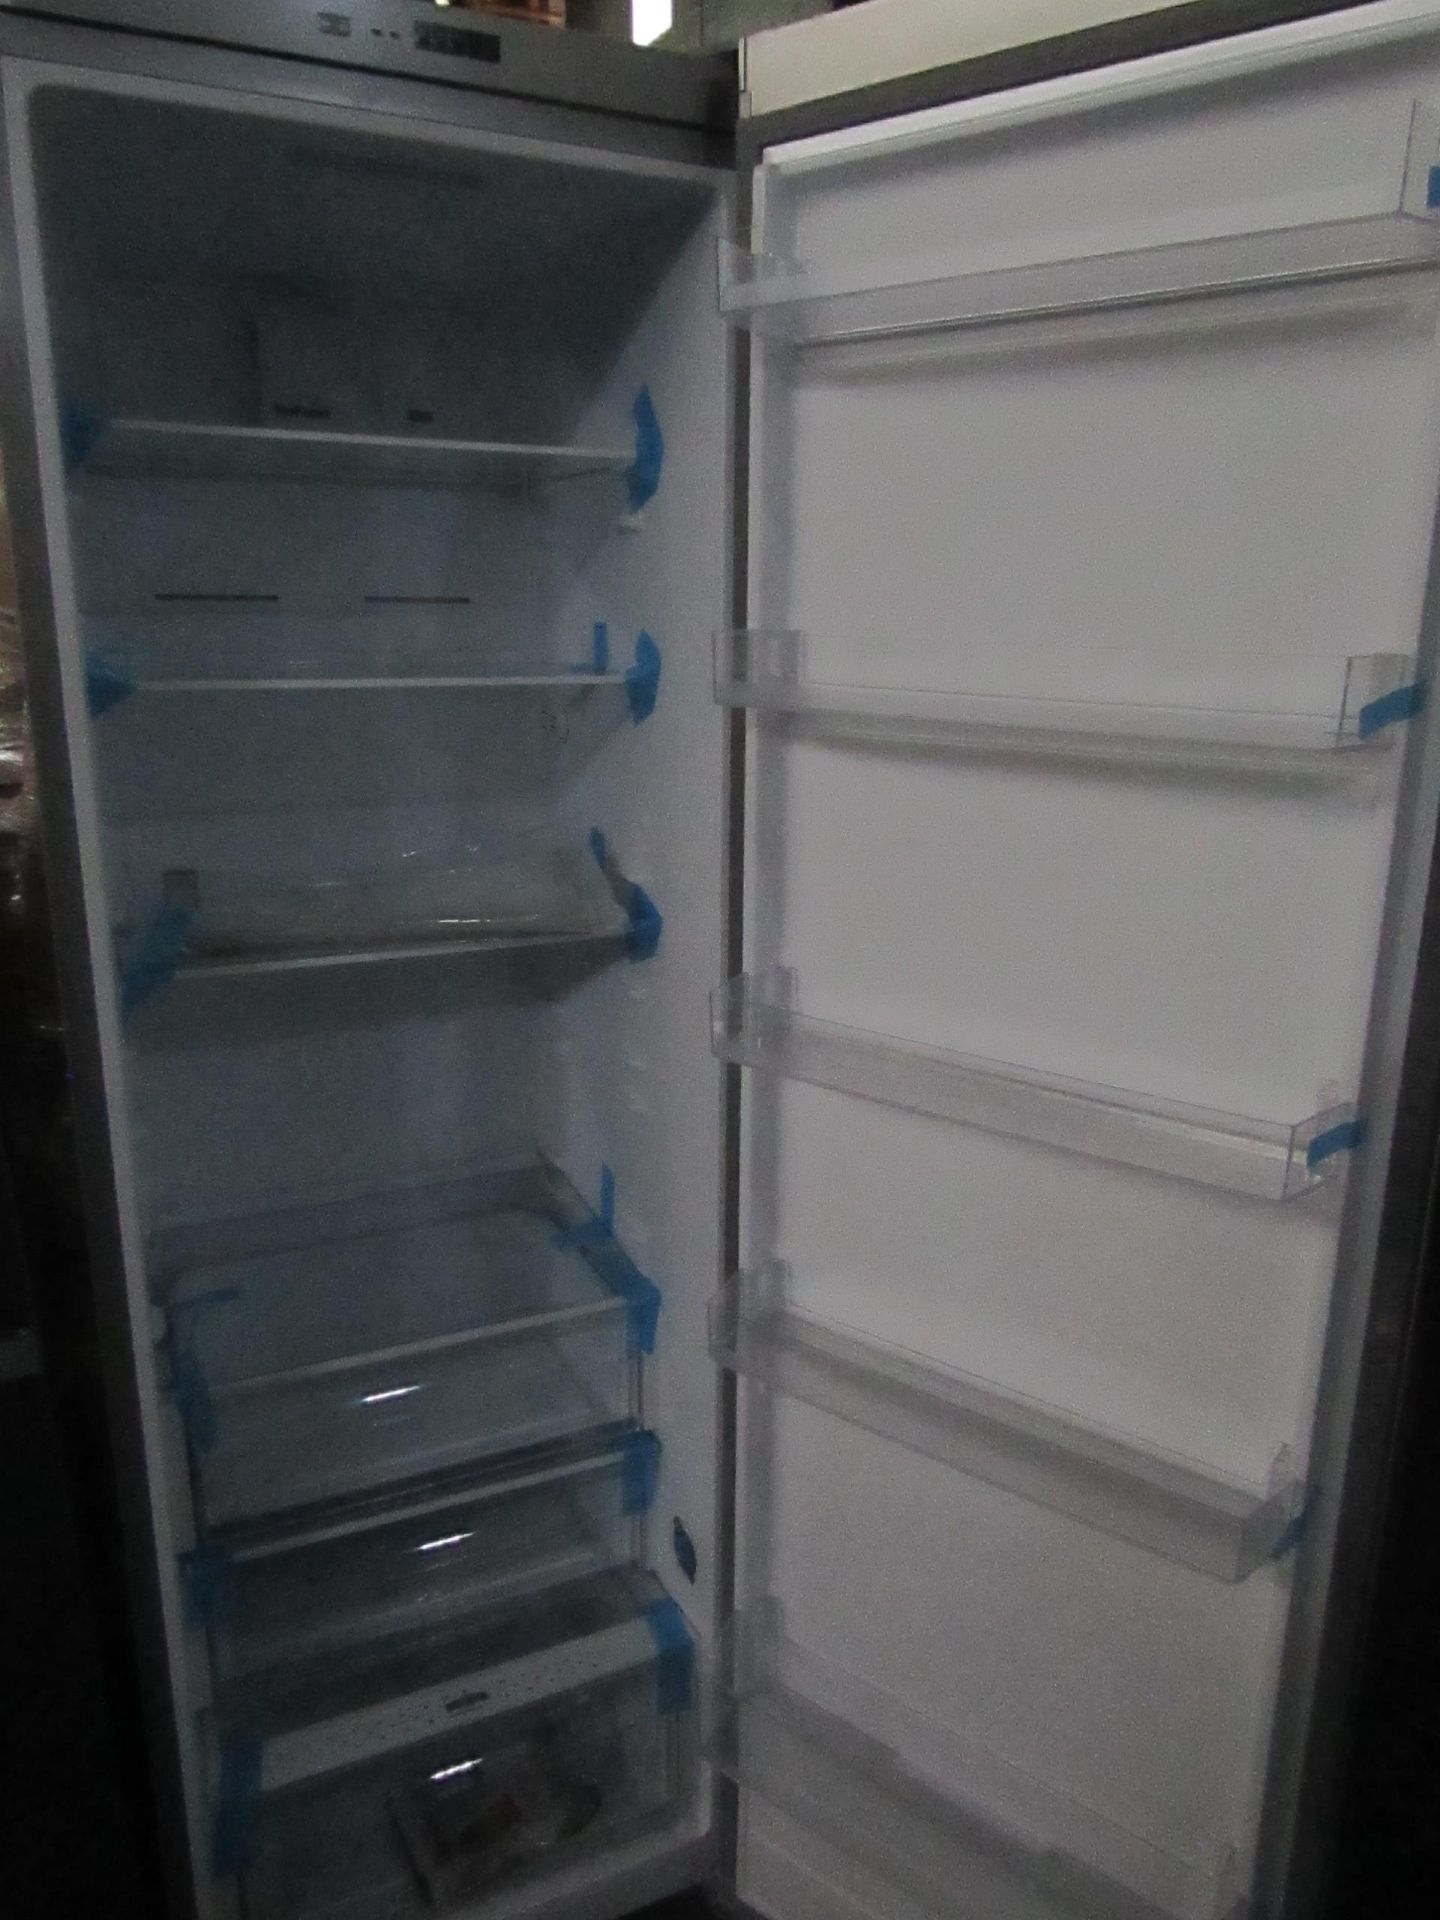 Smeg tall freestanding fridge, tested working but has exterior damage on the bottom corner. - Image 2 of 2